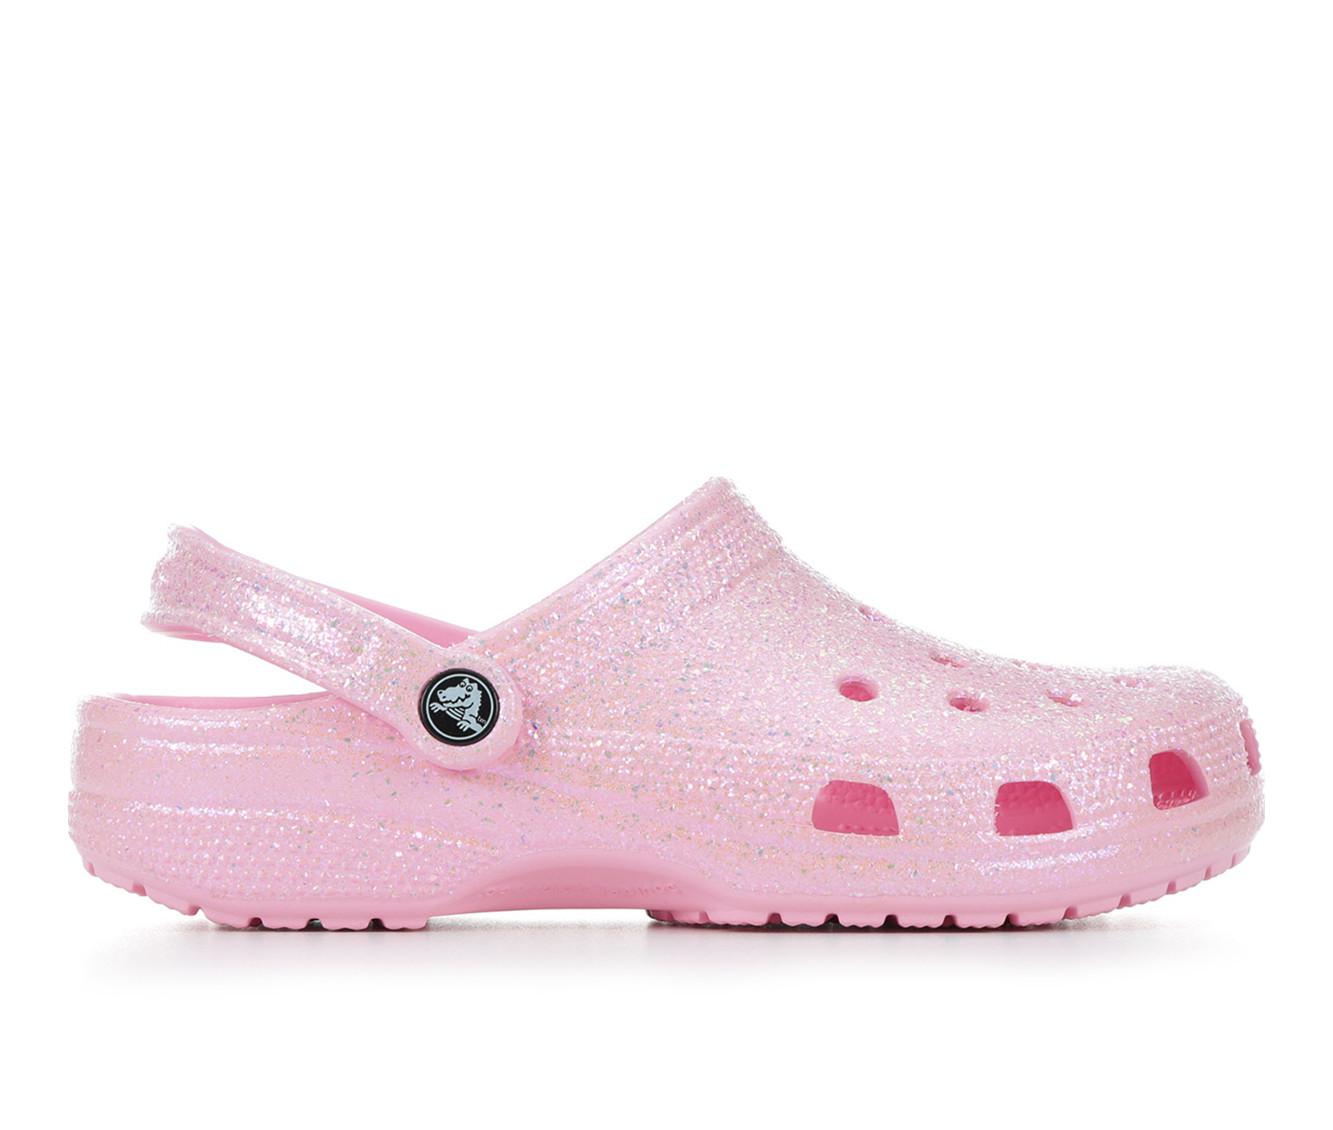 Bling Crocs 7 / Hot Pink